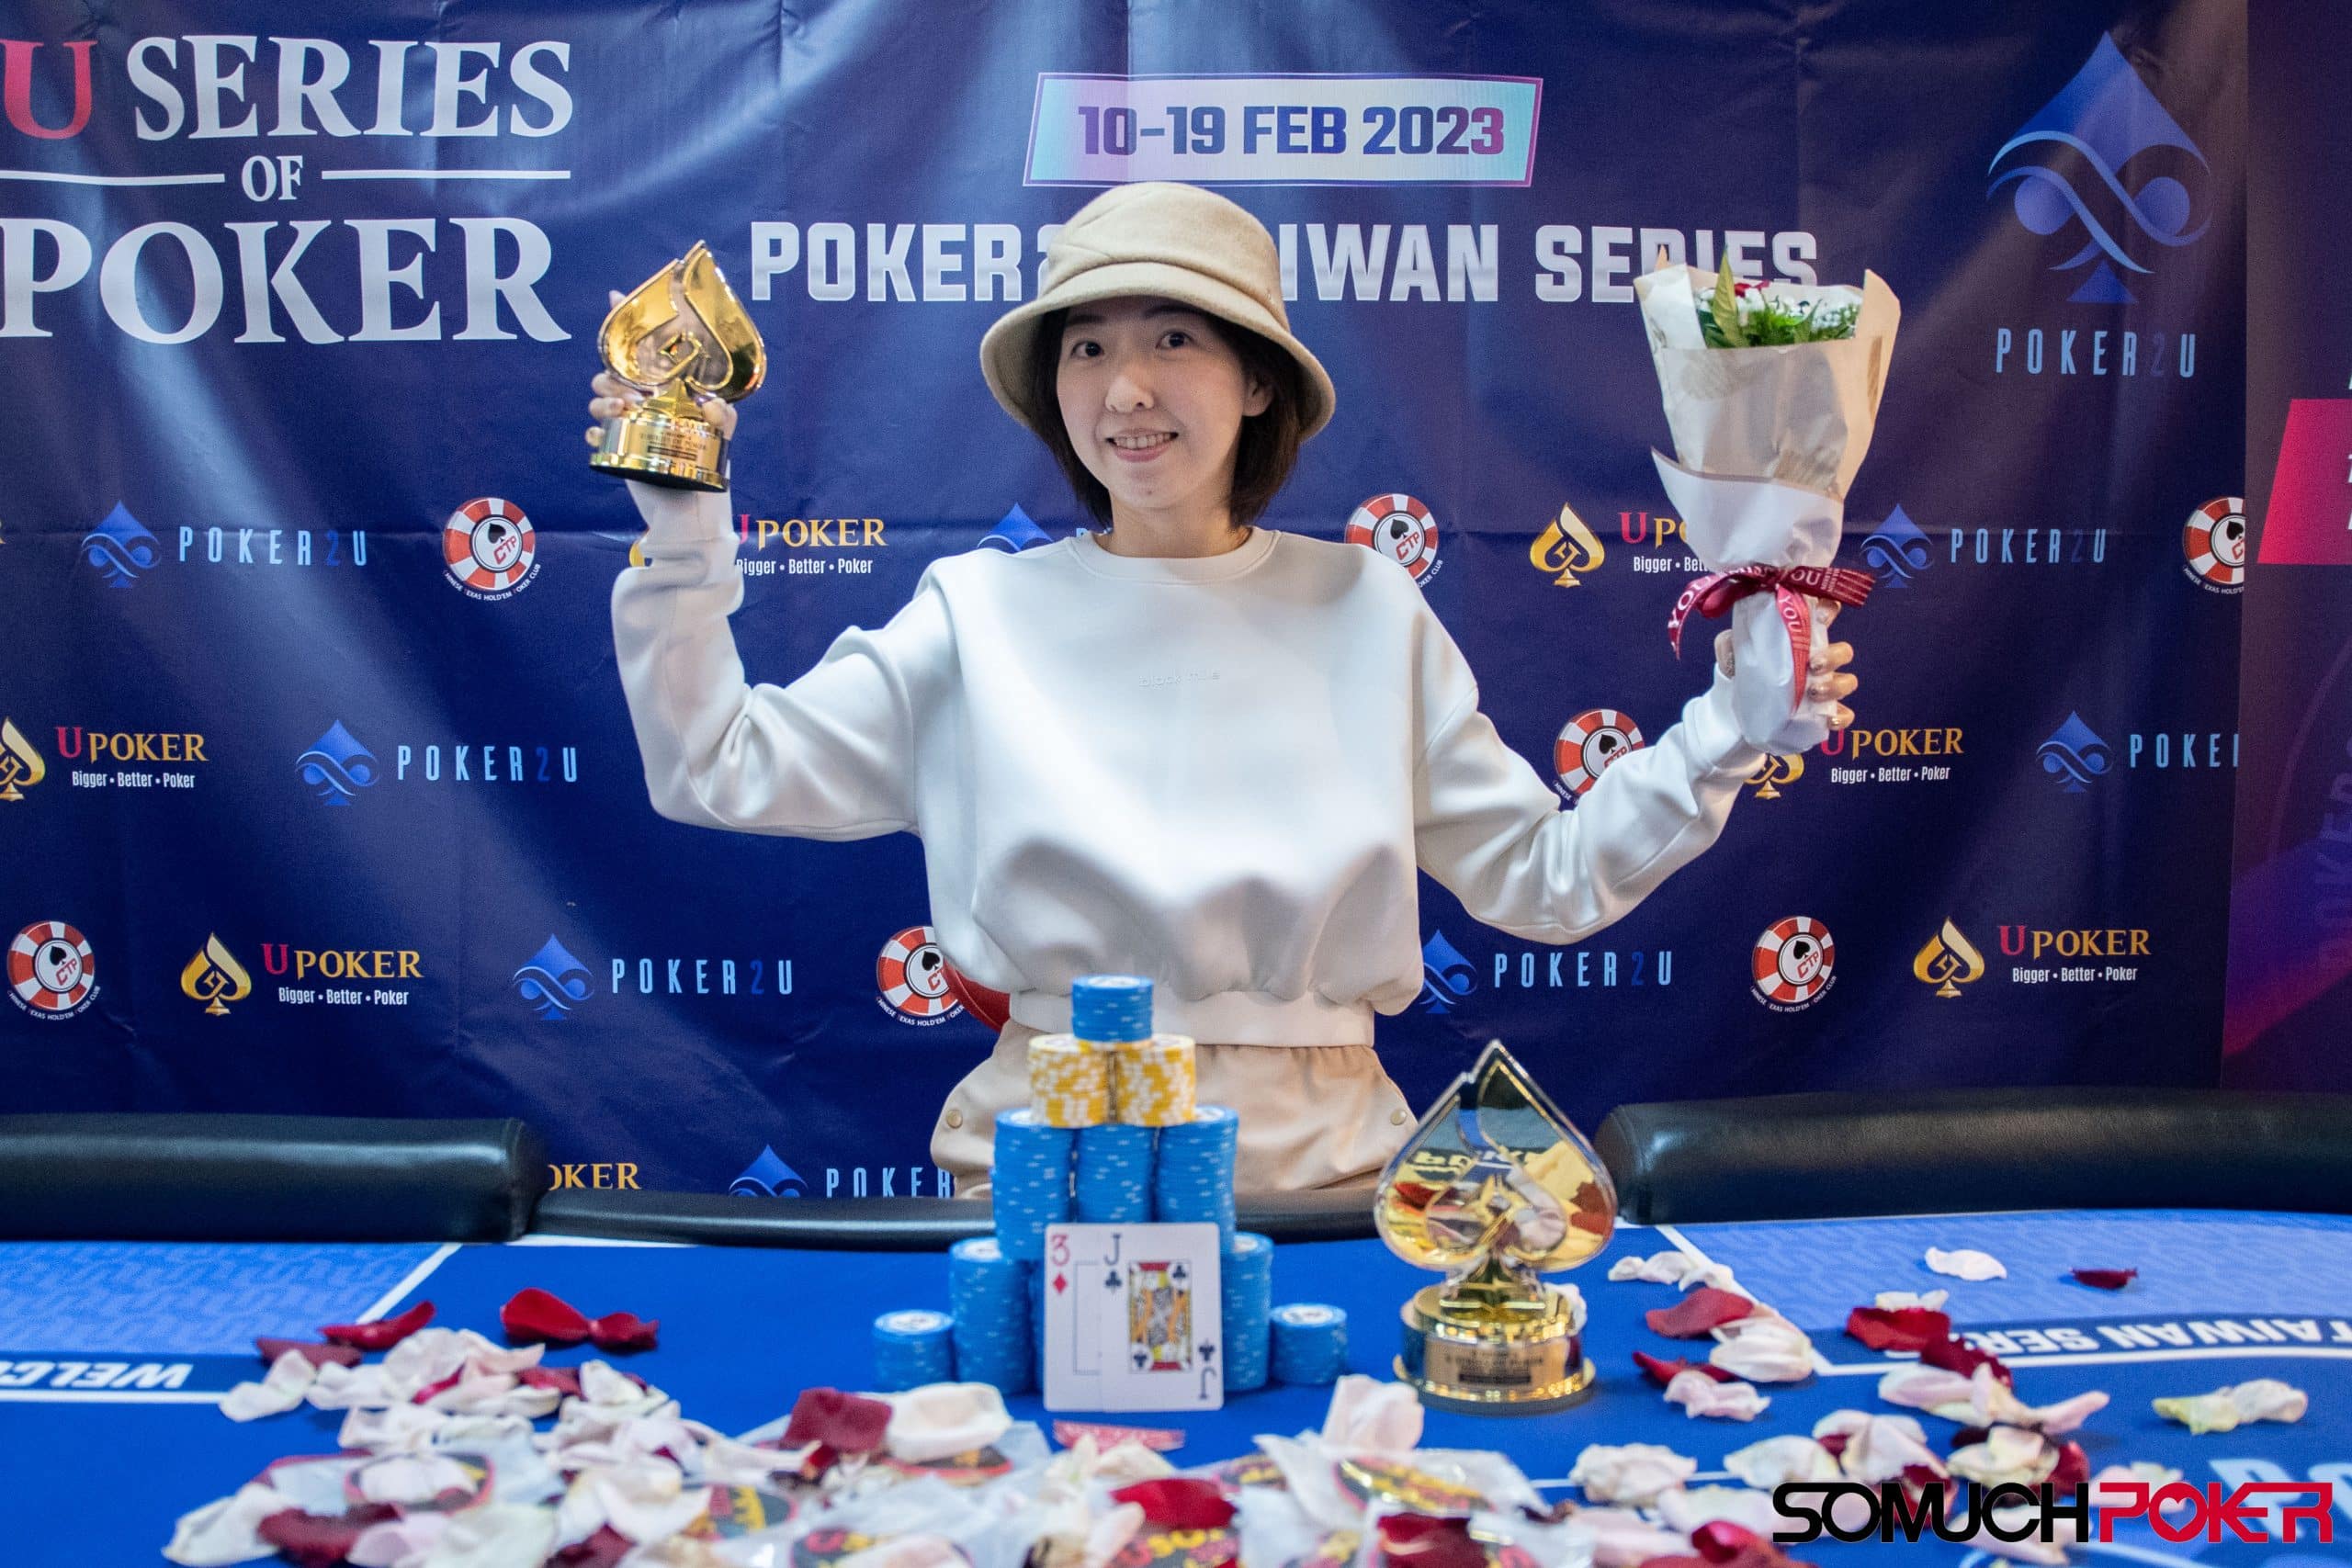 USOP: Poker2U Taiwan Series: MAIN EVENT starts today @1pm; 李書吟, 王淨加, Chris Chen win trophies